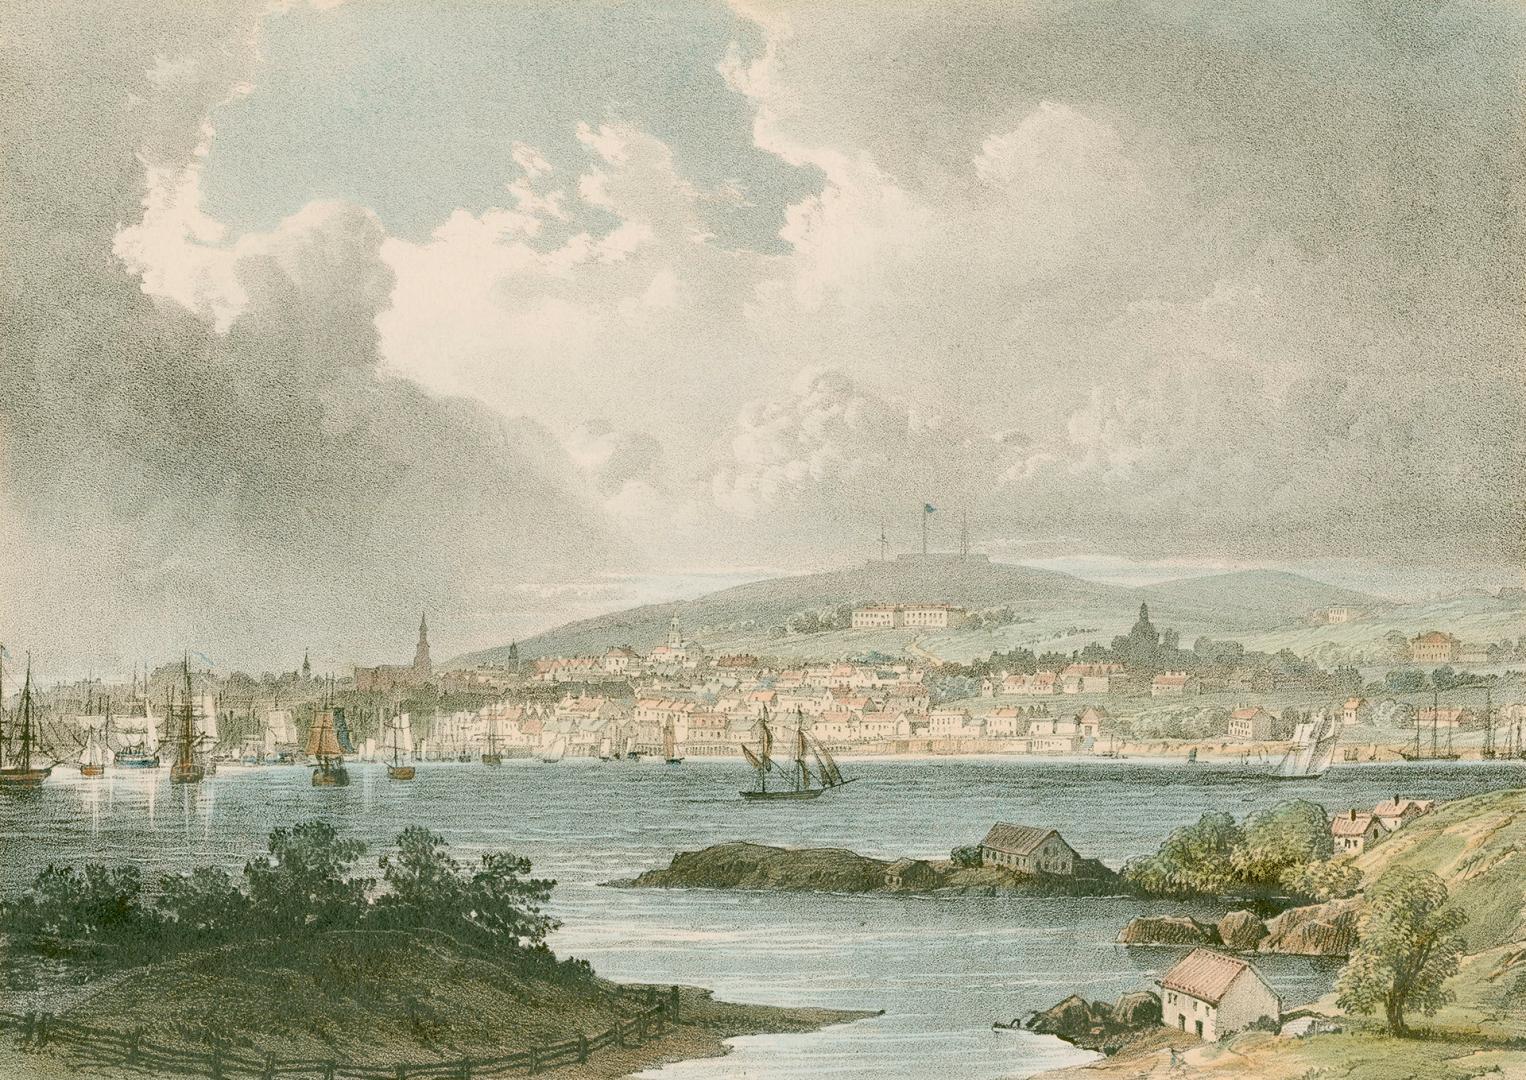 View of Halifax from Dartmouth Cove (Nova Scotia, c.1828)